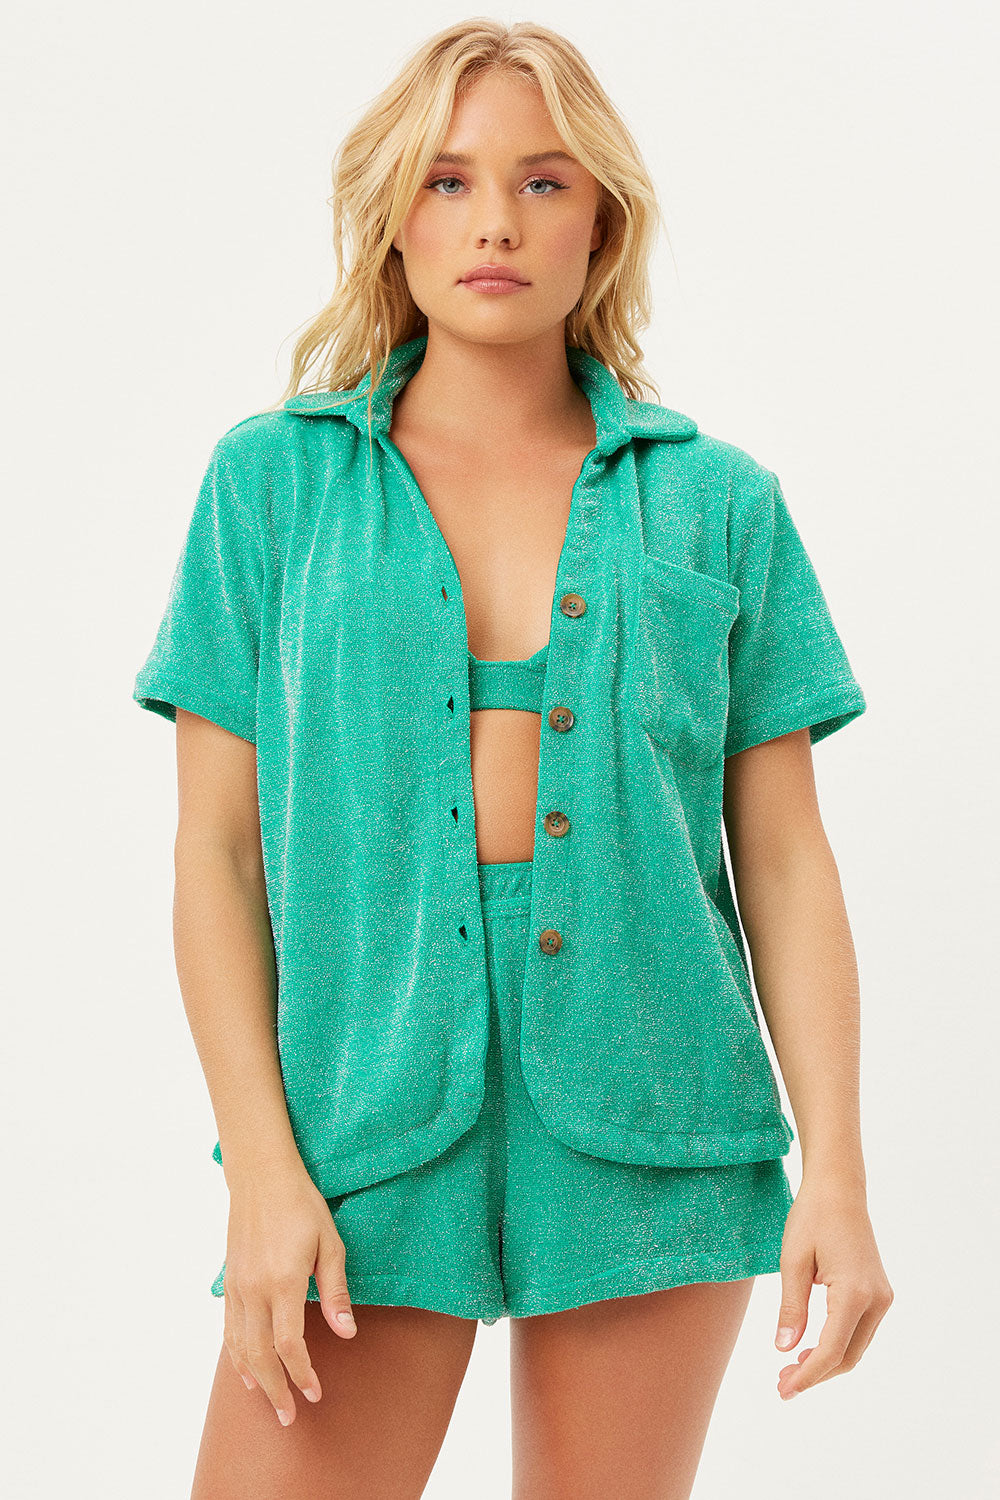 Coco Sparkle Terry Button Up Shirt - Mistletoe Green